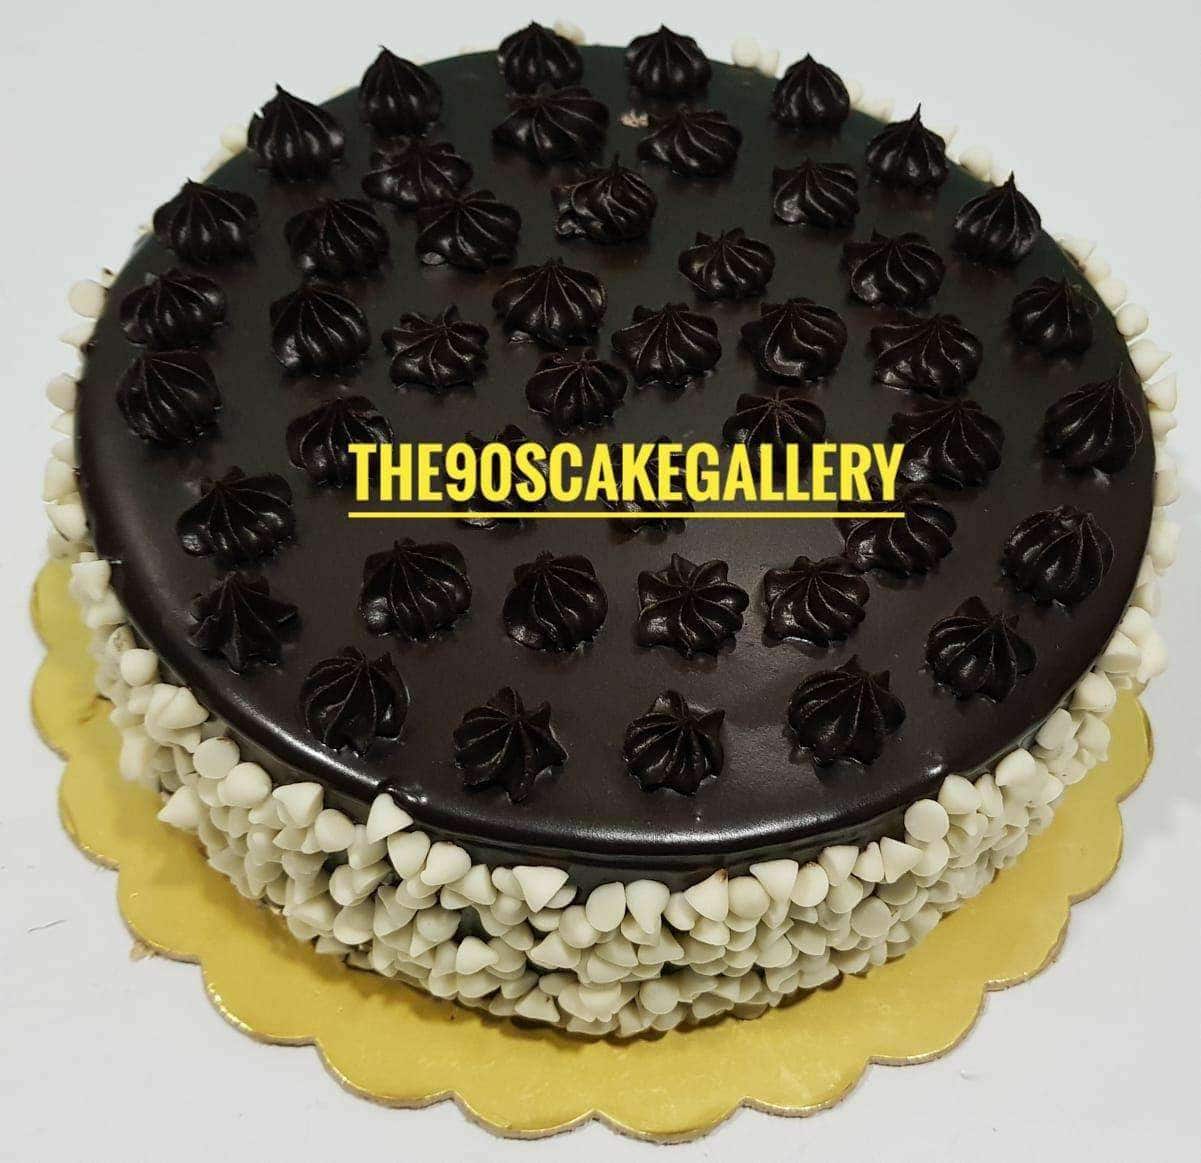 The 90s Cake Gallery in Airoli,Mumbai - Order Food Online - Best Cake Shops  in Mumbai - Justdial